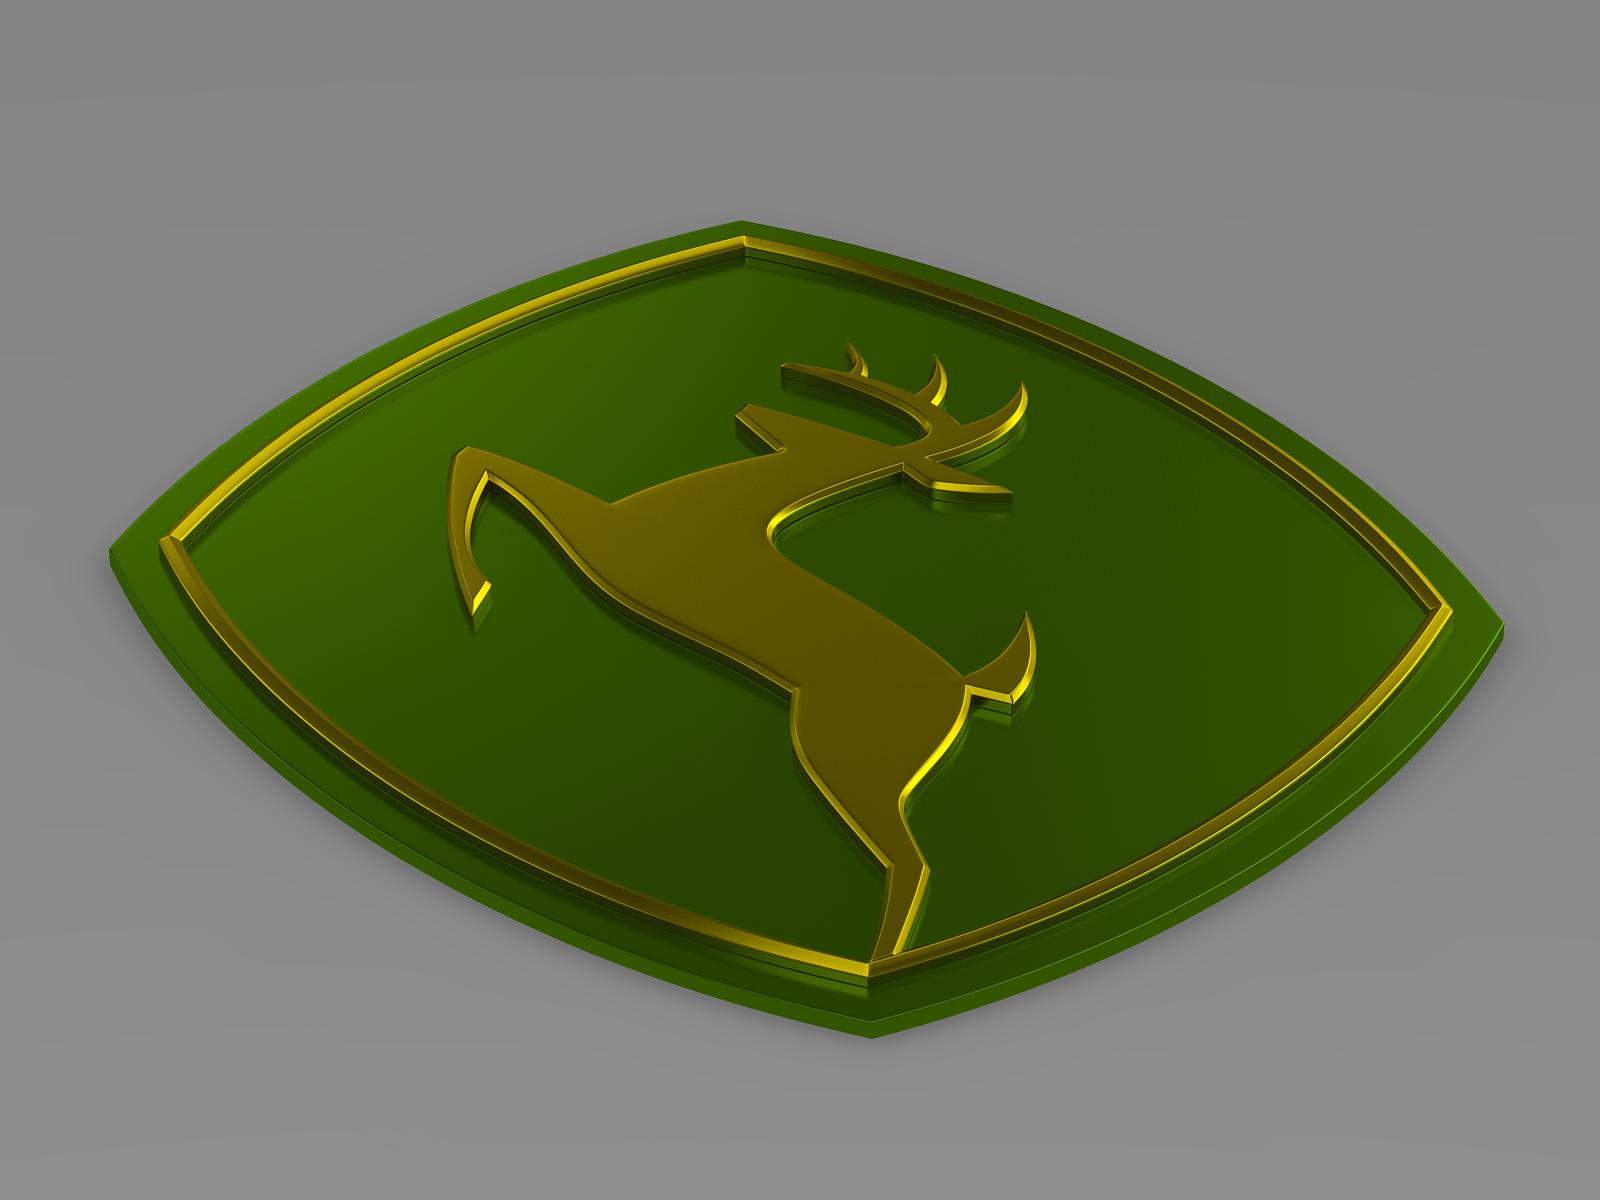 John Deere logo, 3D CAD Model Library